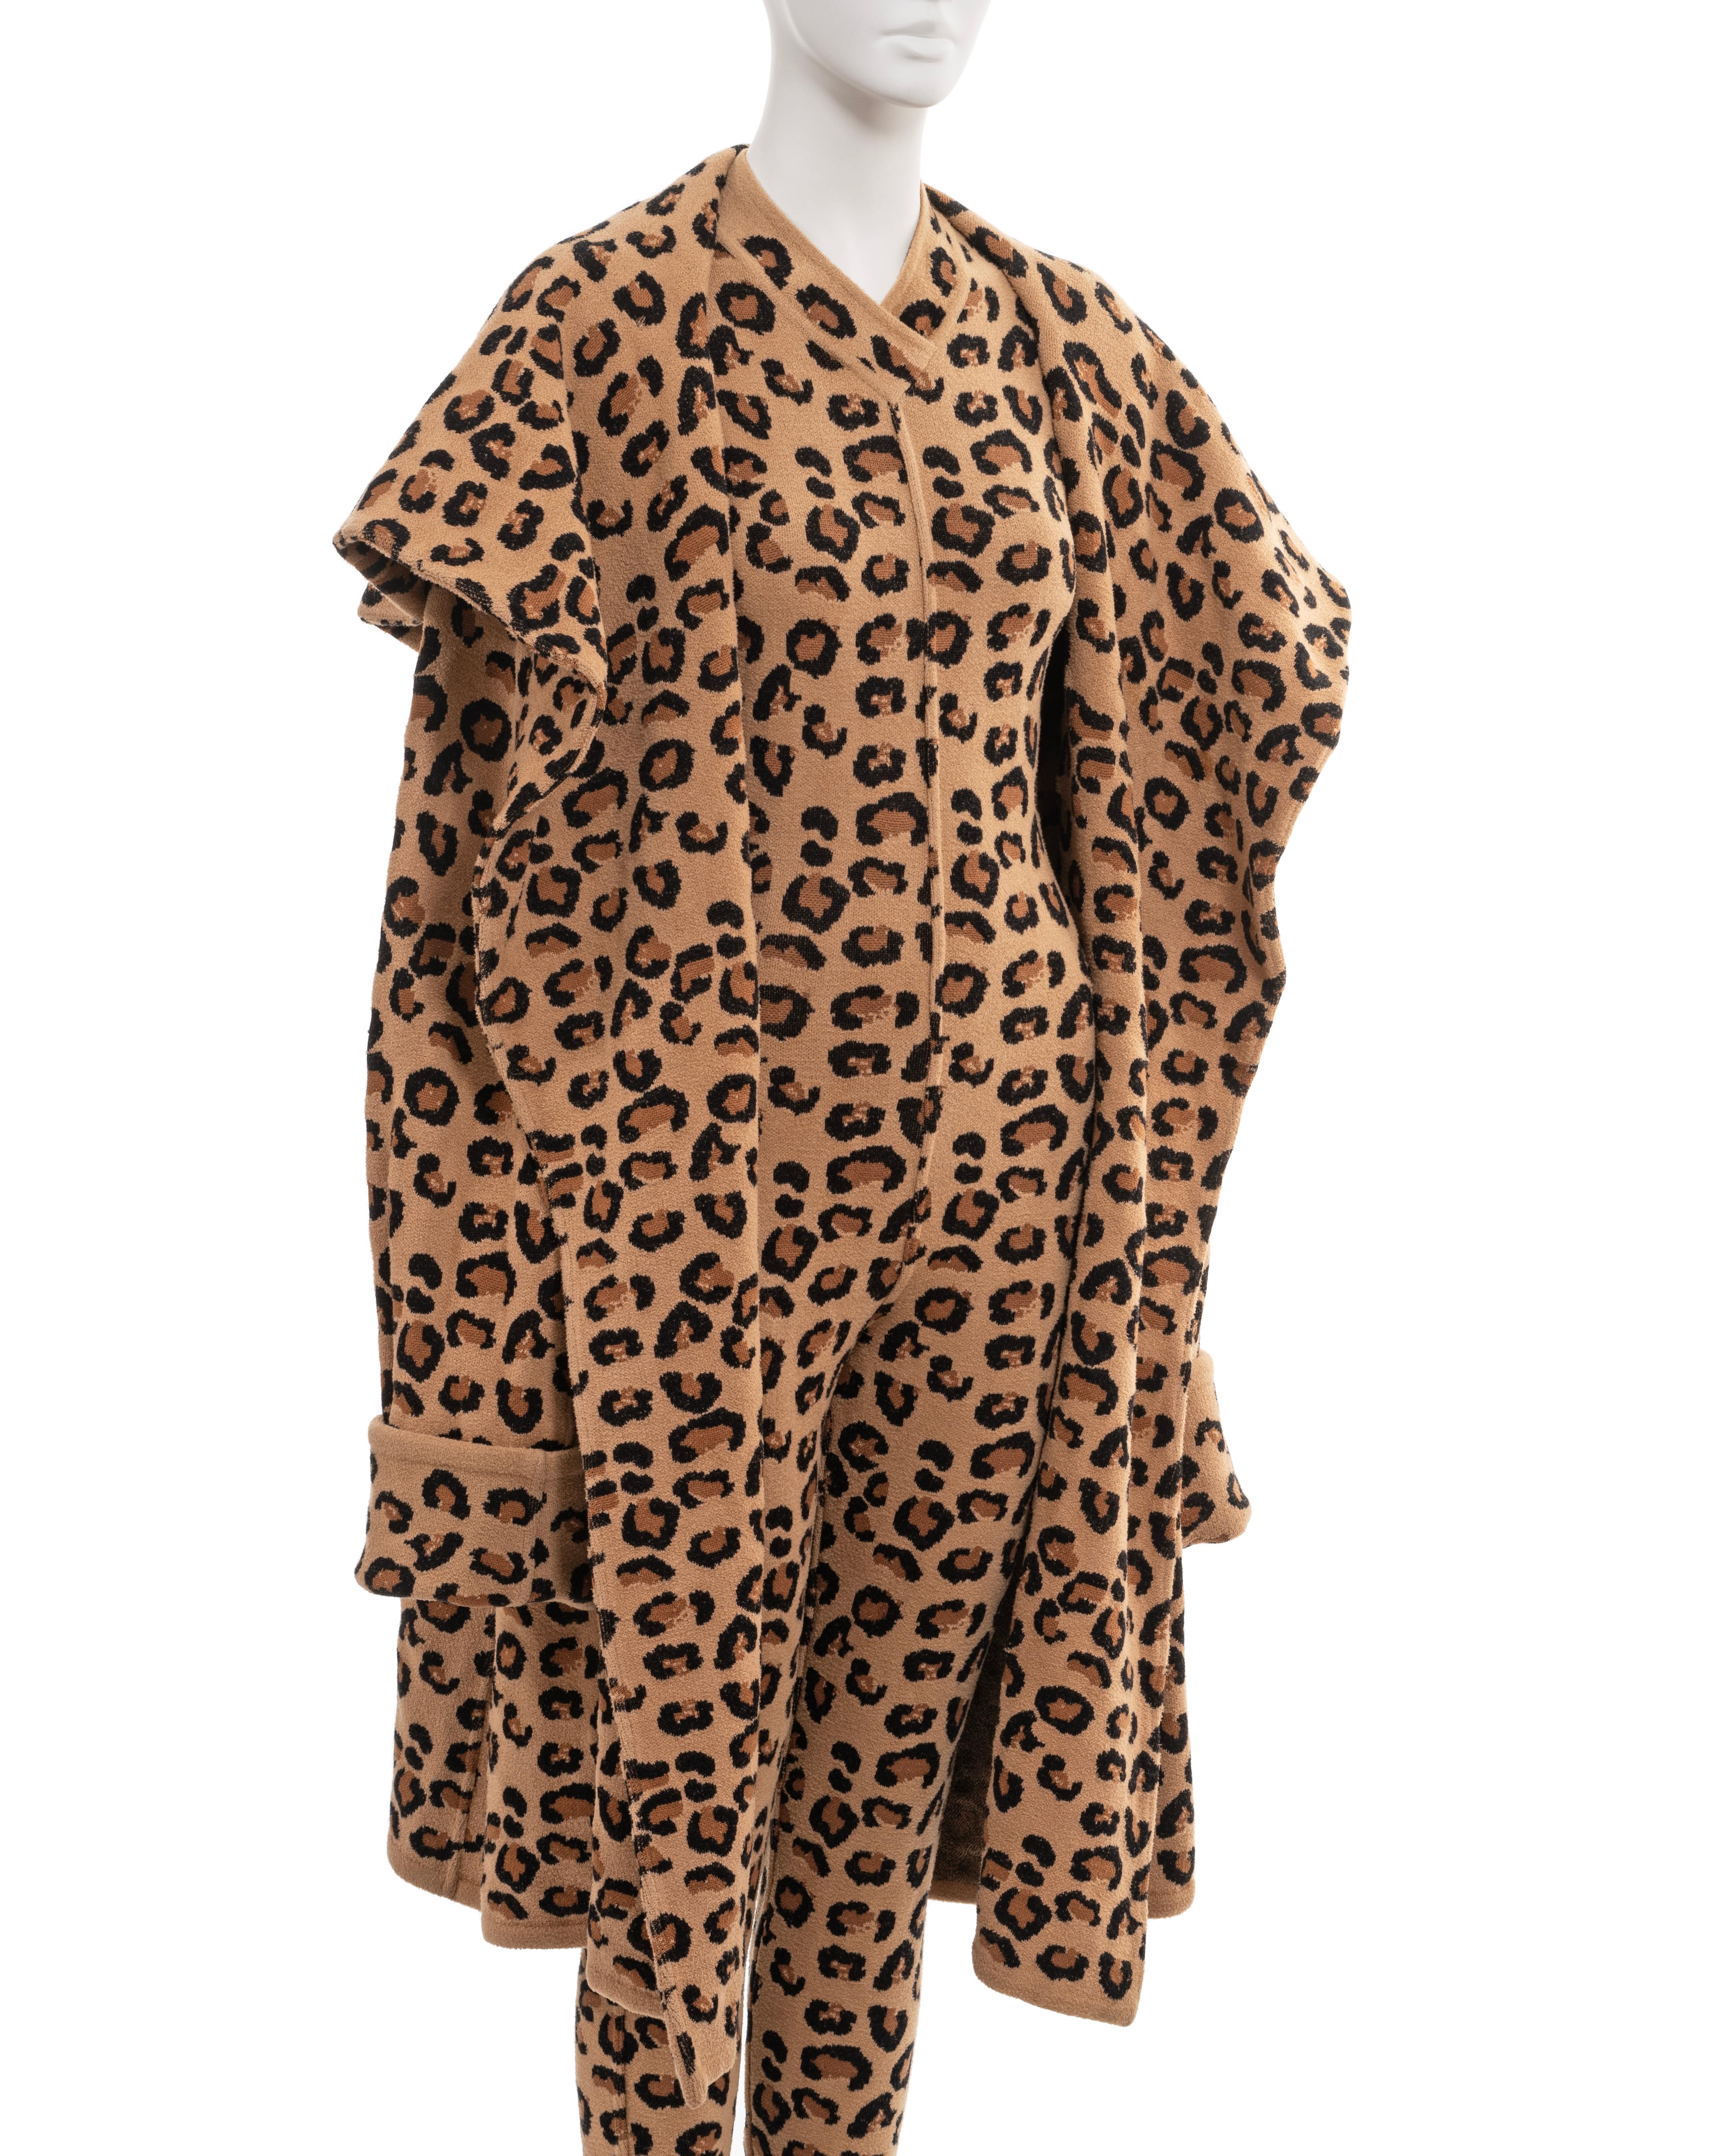 Azzedine Alaia leopard jacquard-knit catsuit and coat runway ensemble, fw 1991 5